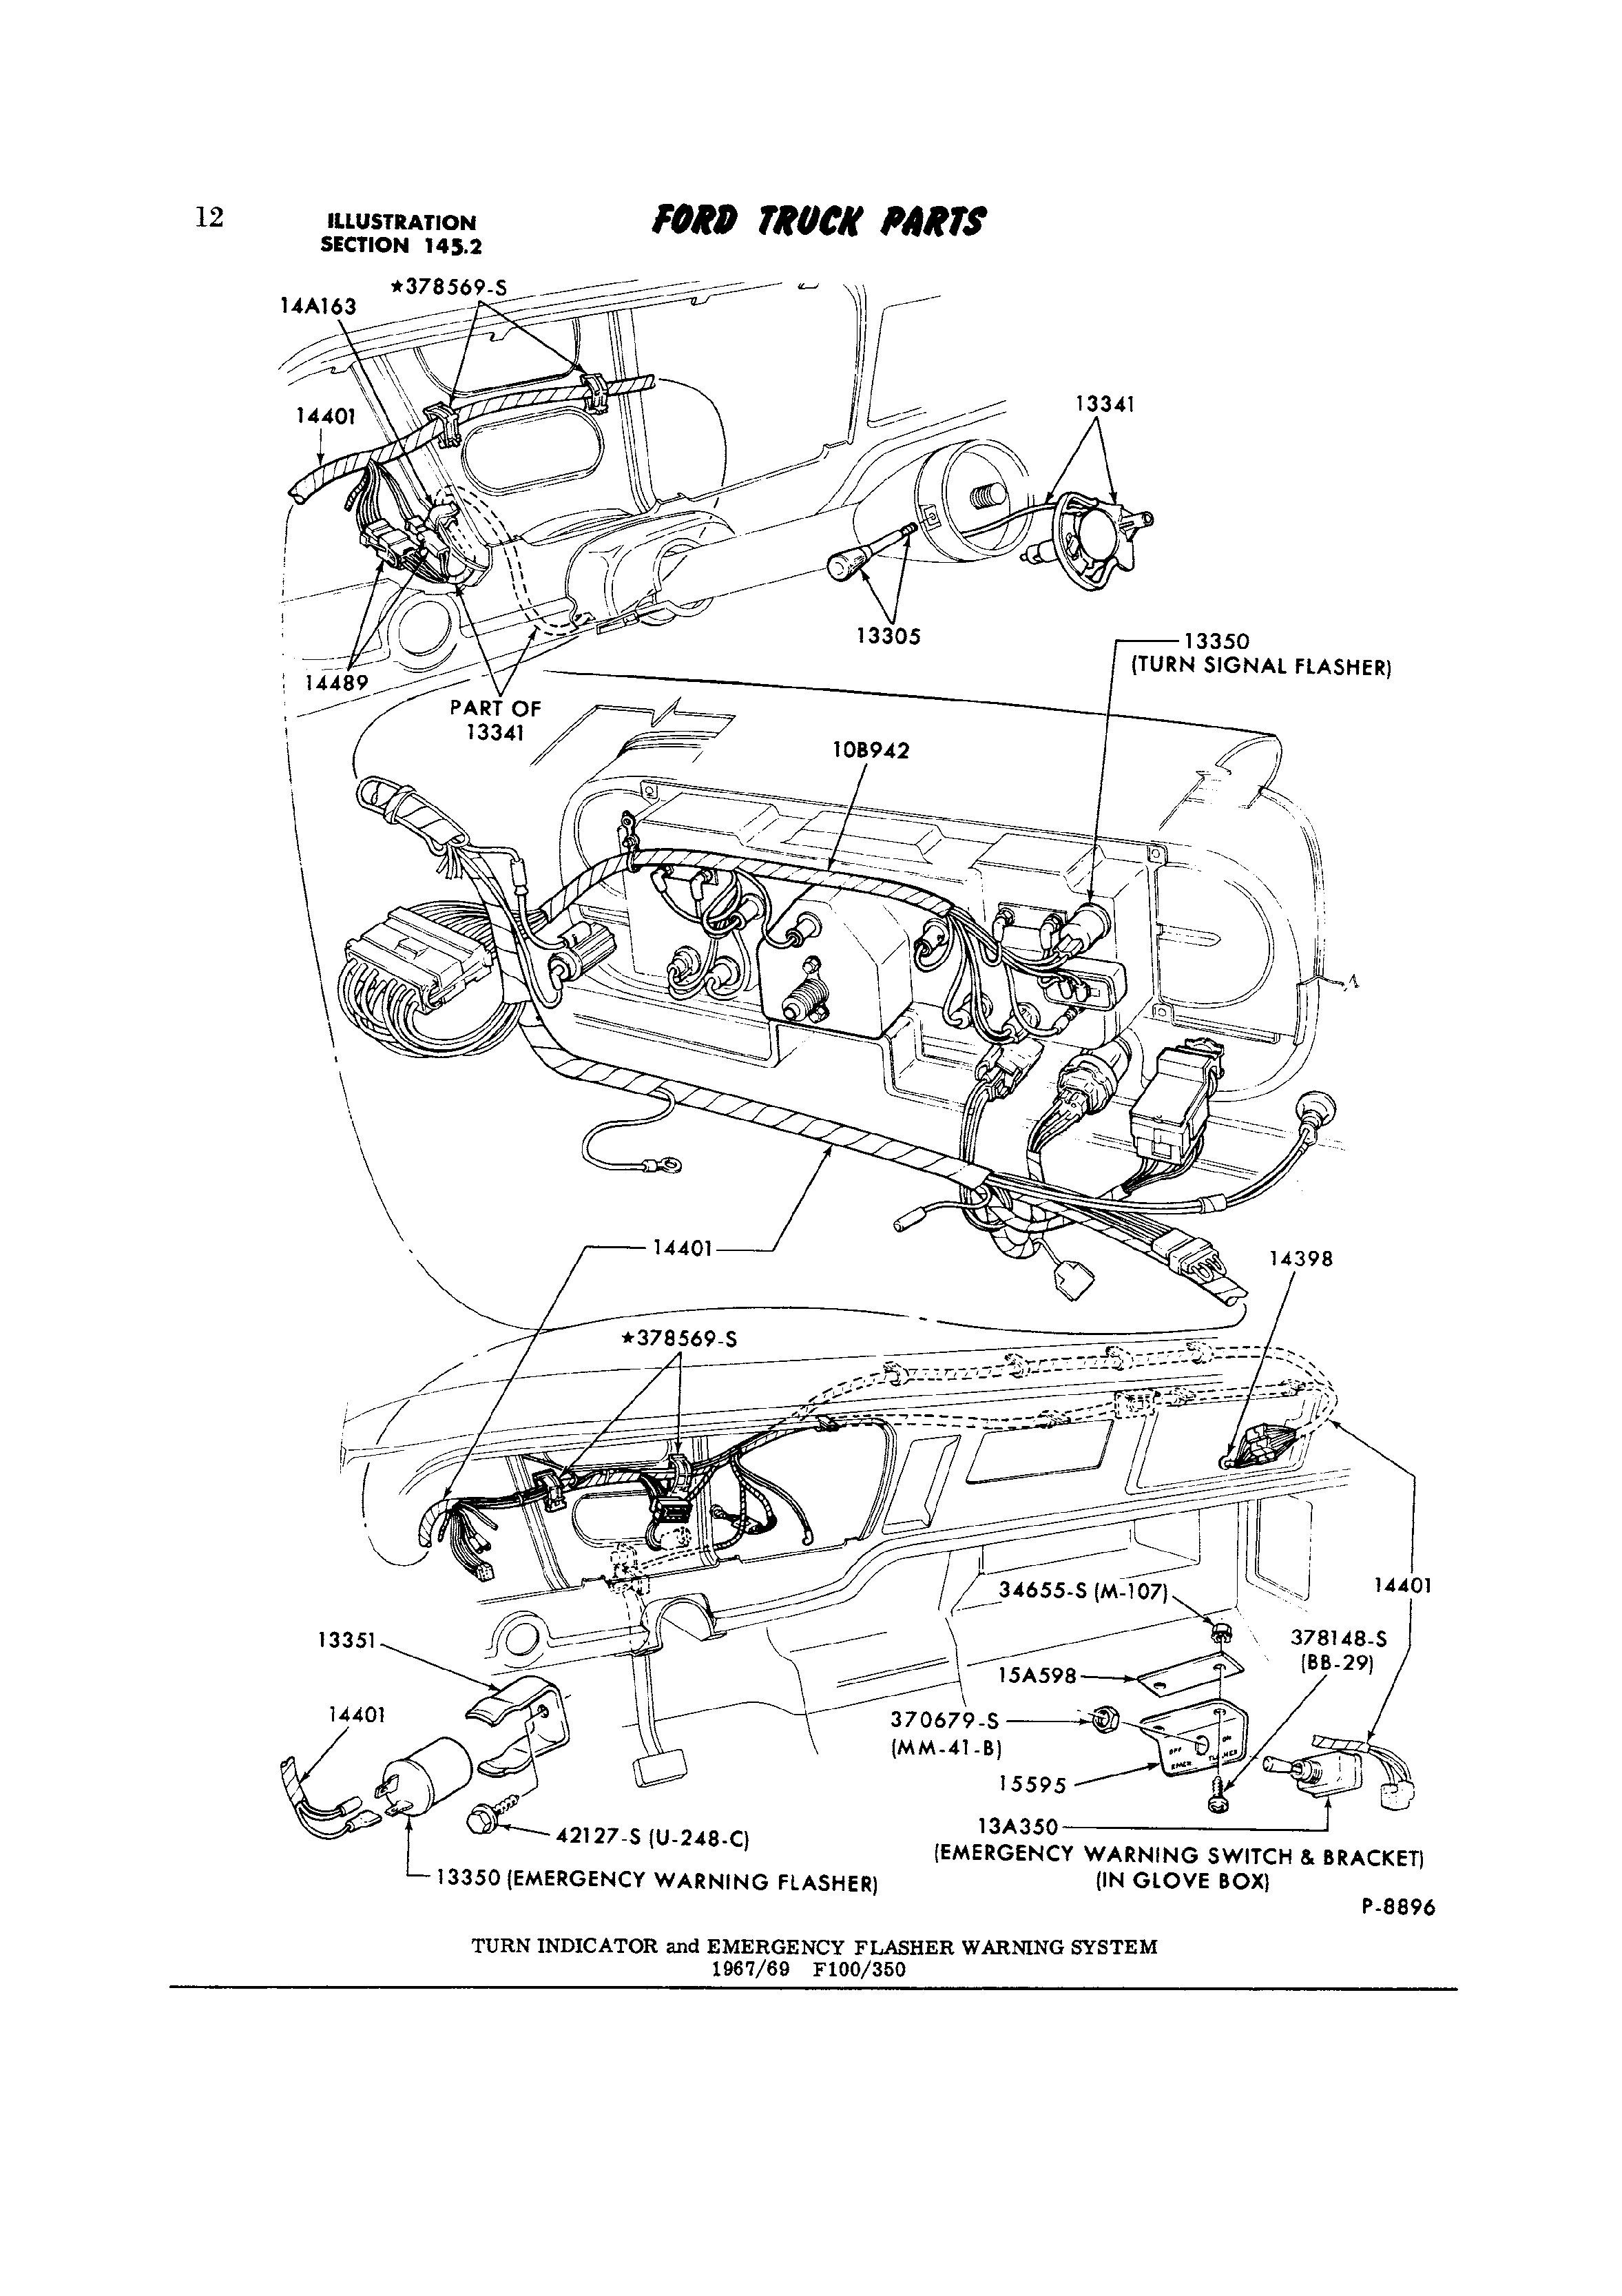 1969 F100 Turn Signal Wiring Diagram from www.ford-trucks.com